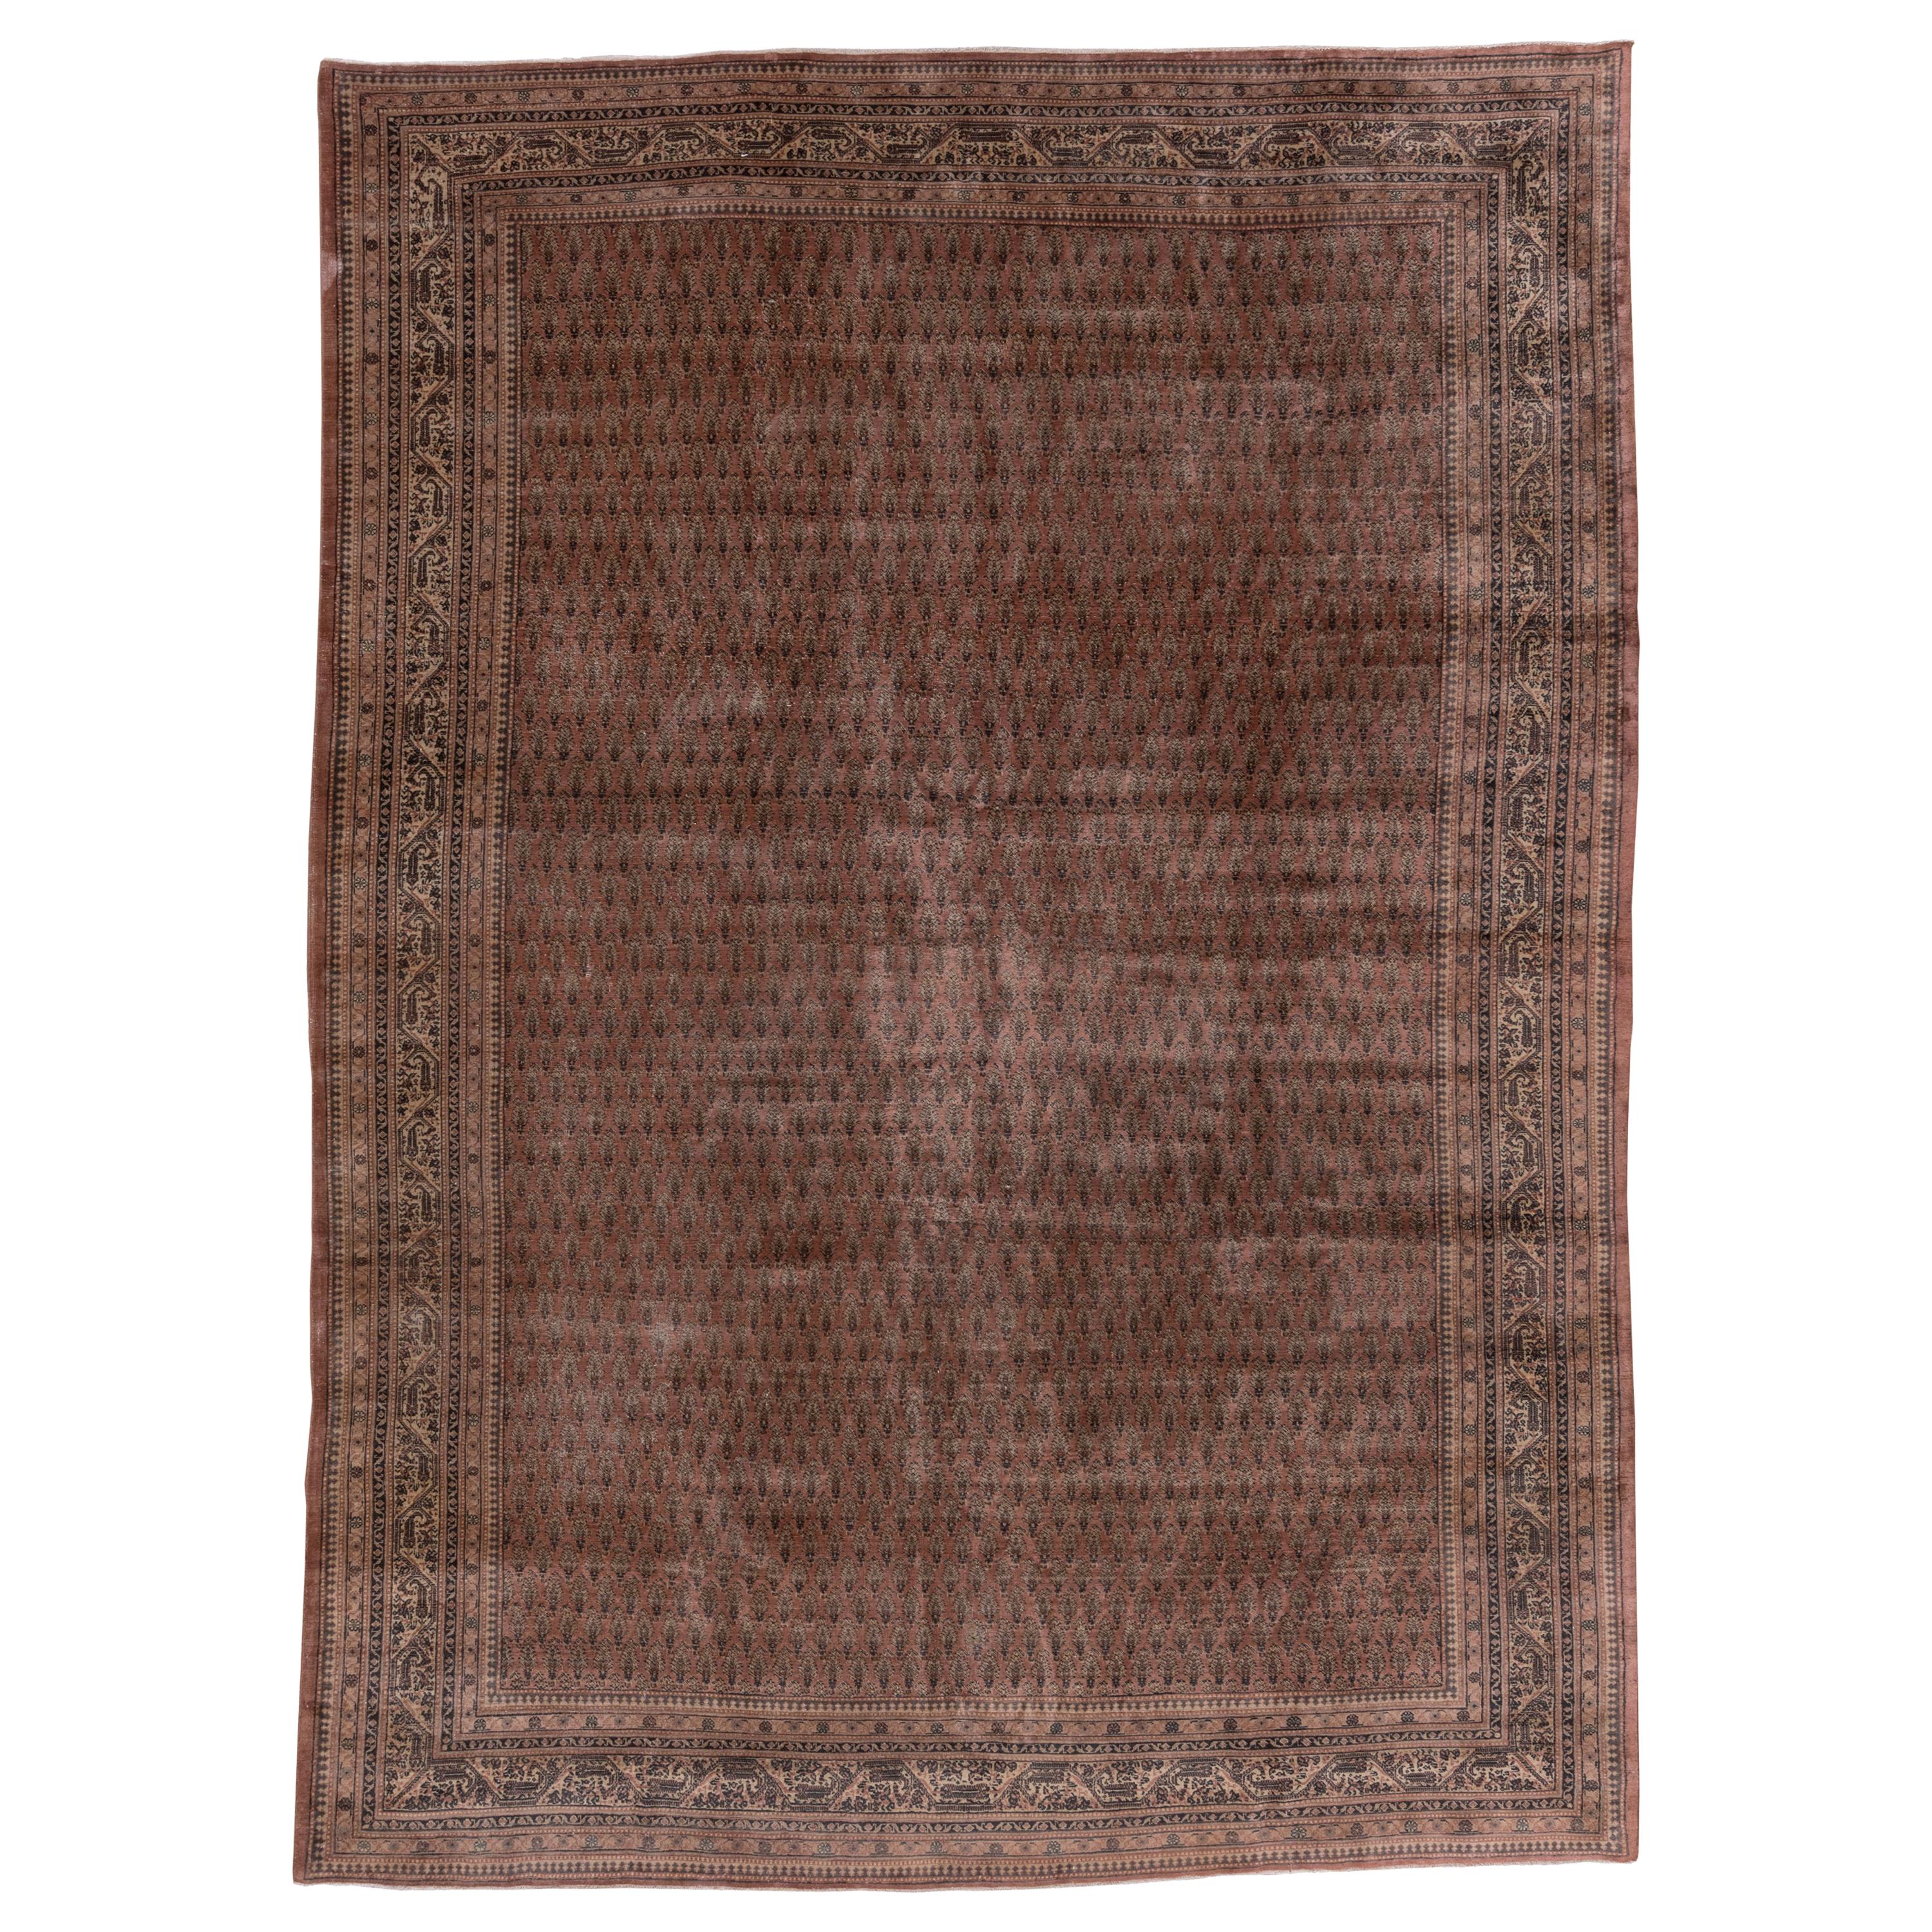 Antique Turkish Brown Sivas Carpet, circa 1930s